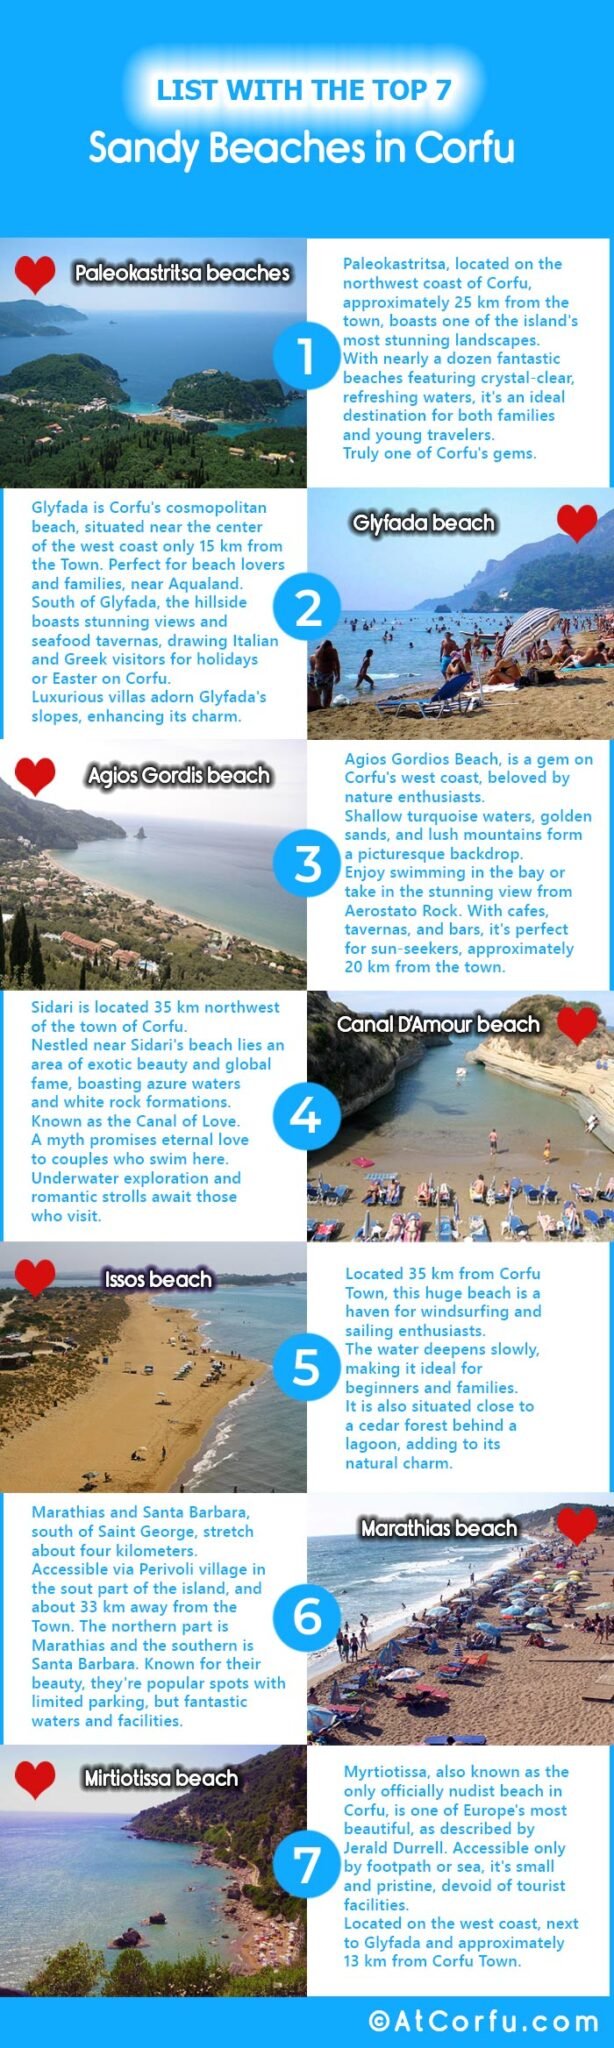 The Top 7 Sandy Beaches in Corfu [Infographic] - AtCorfu